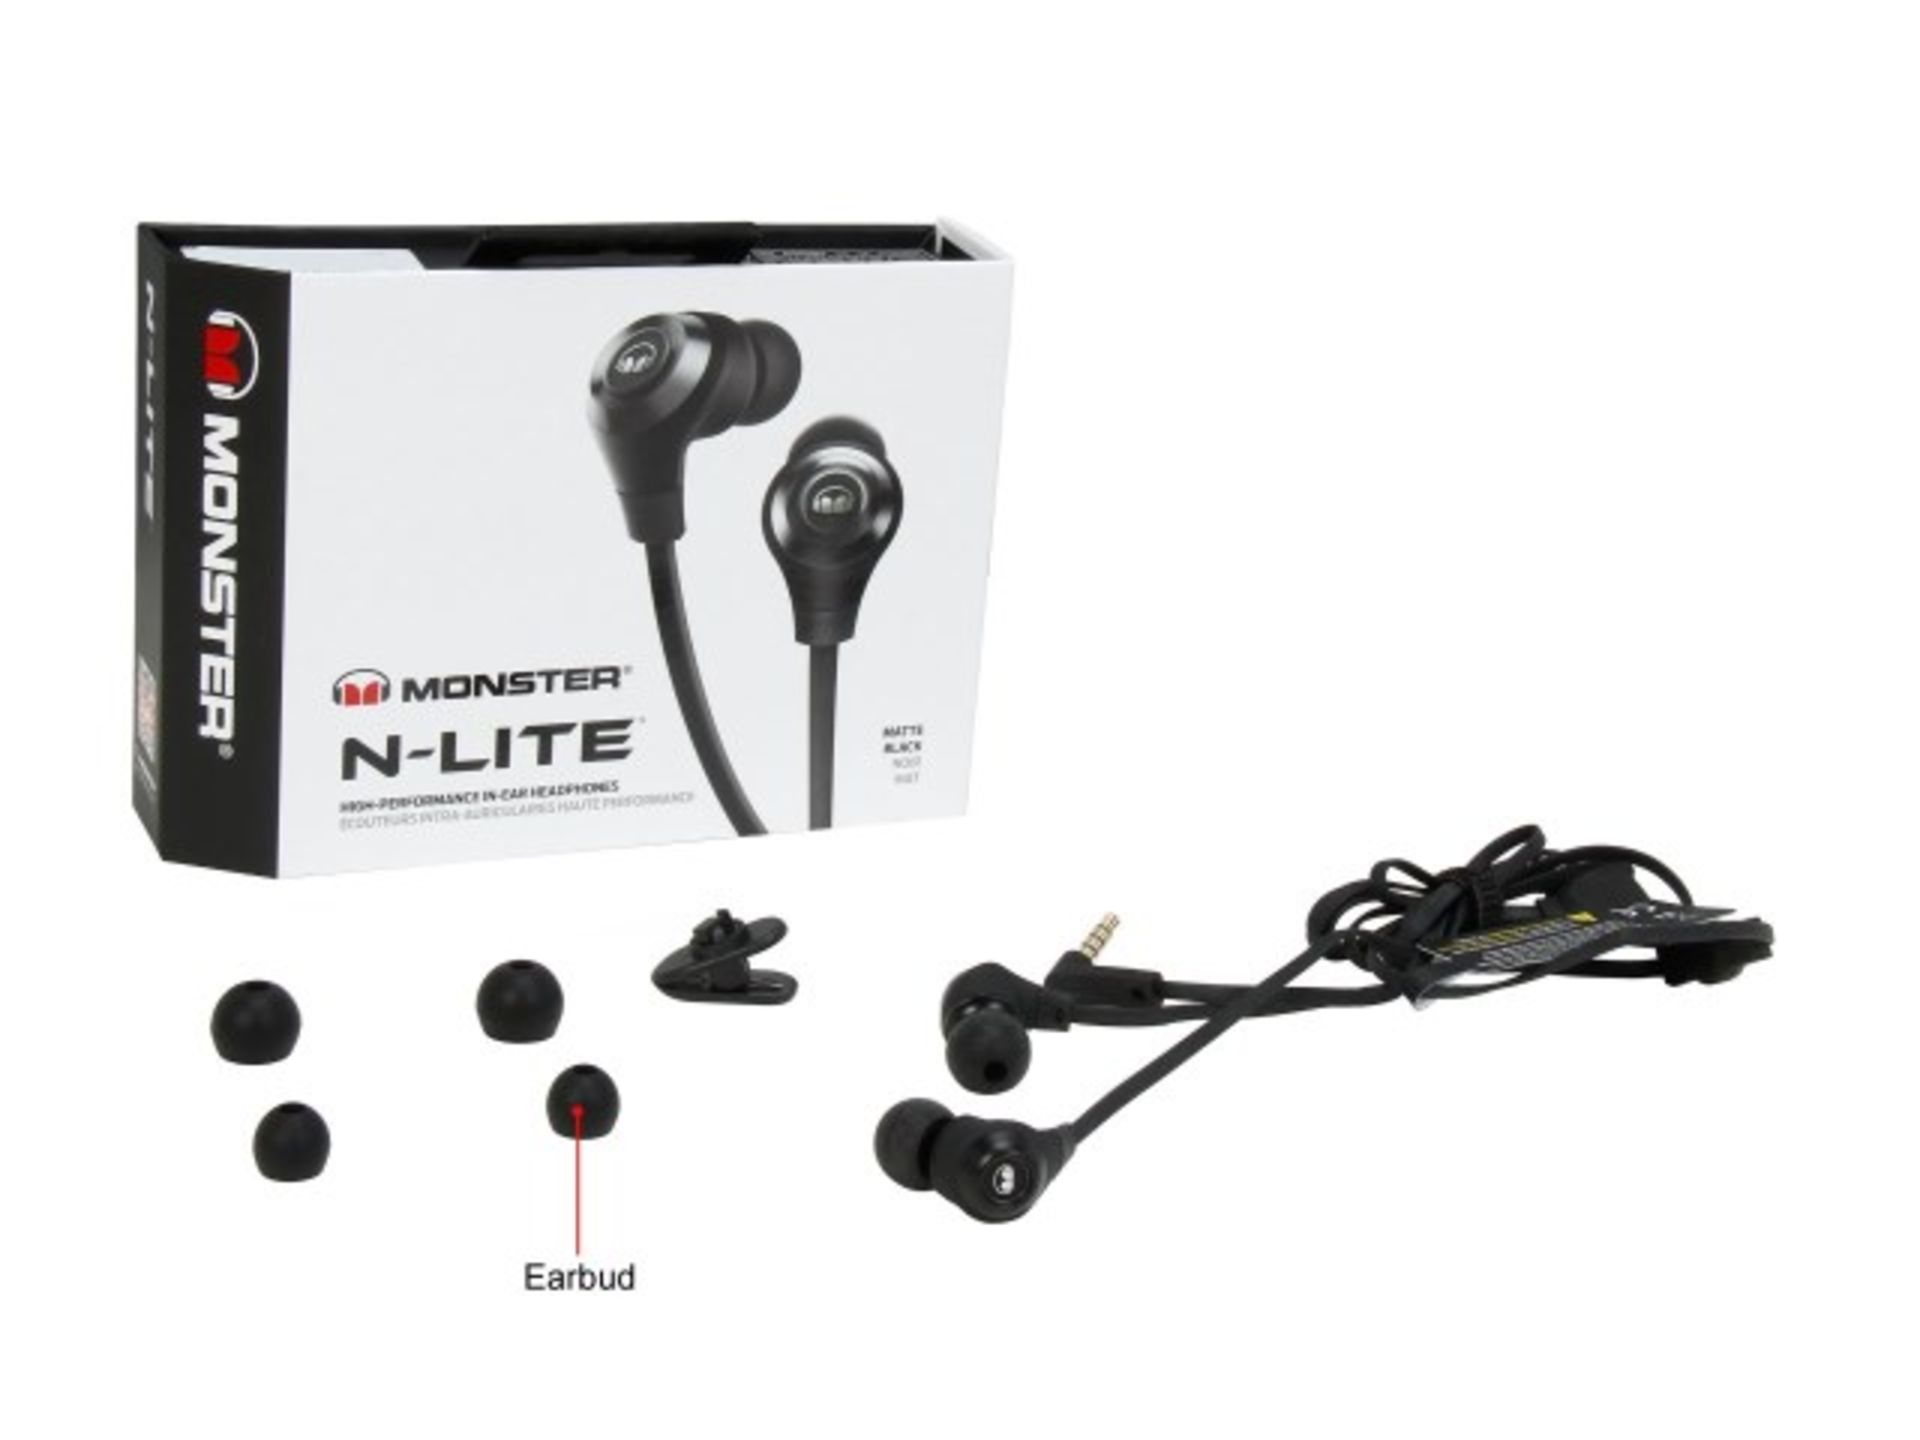 V Brand New Monster N-Lite High Performance In-Ear Headphones In Black X 2 YOUR BID PRICE TO BE